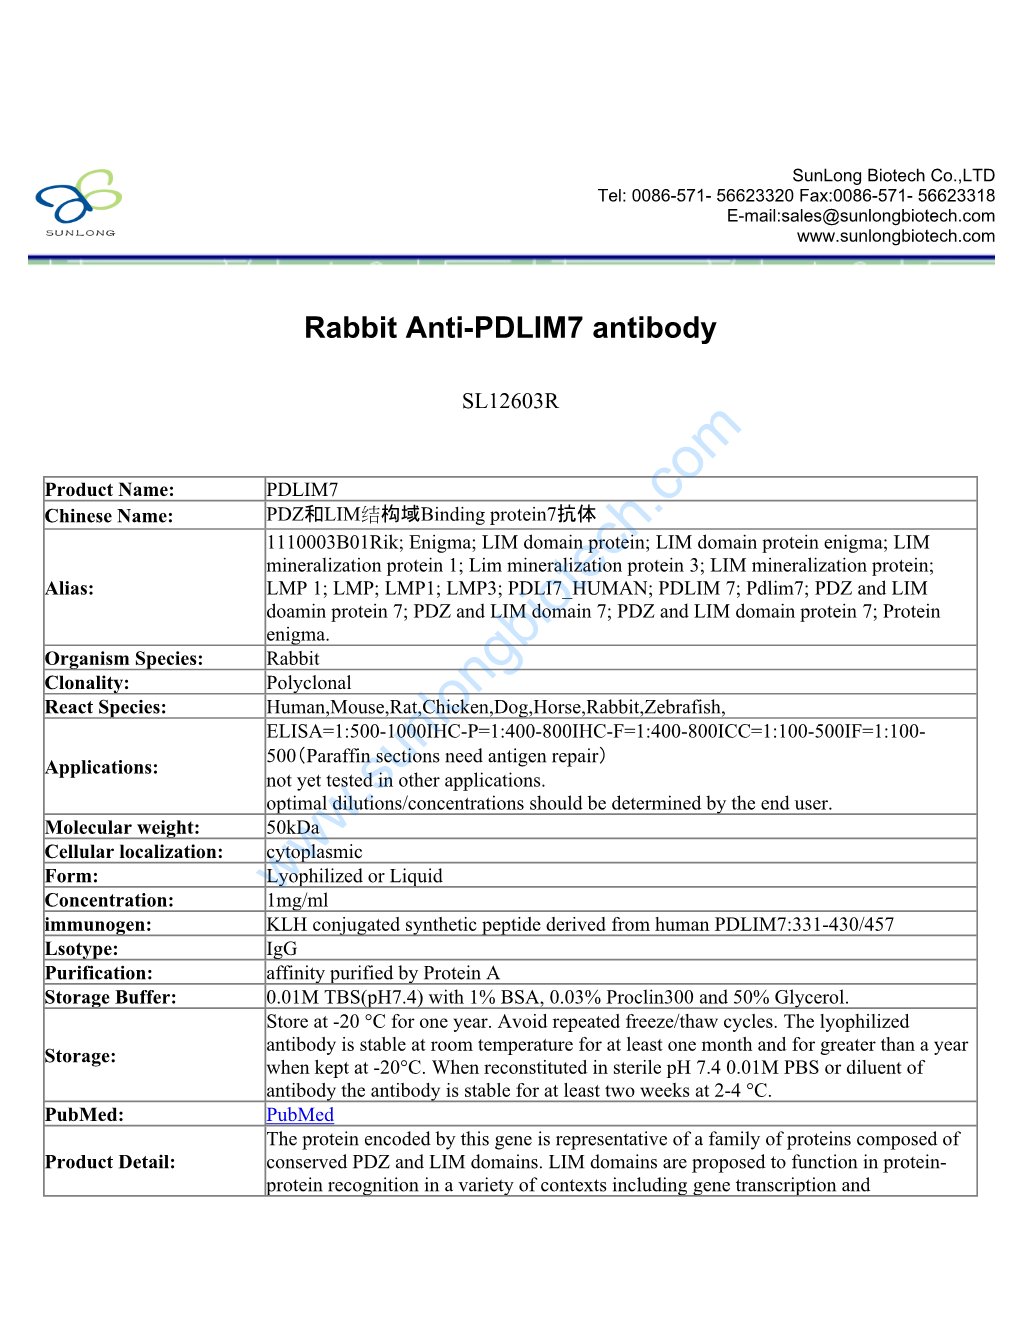 Rabbit Anti-PDLIM7 Antibody-SL12603R